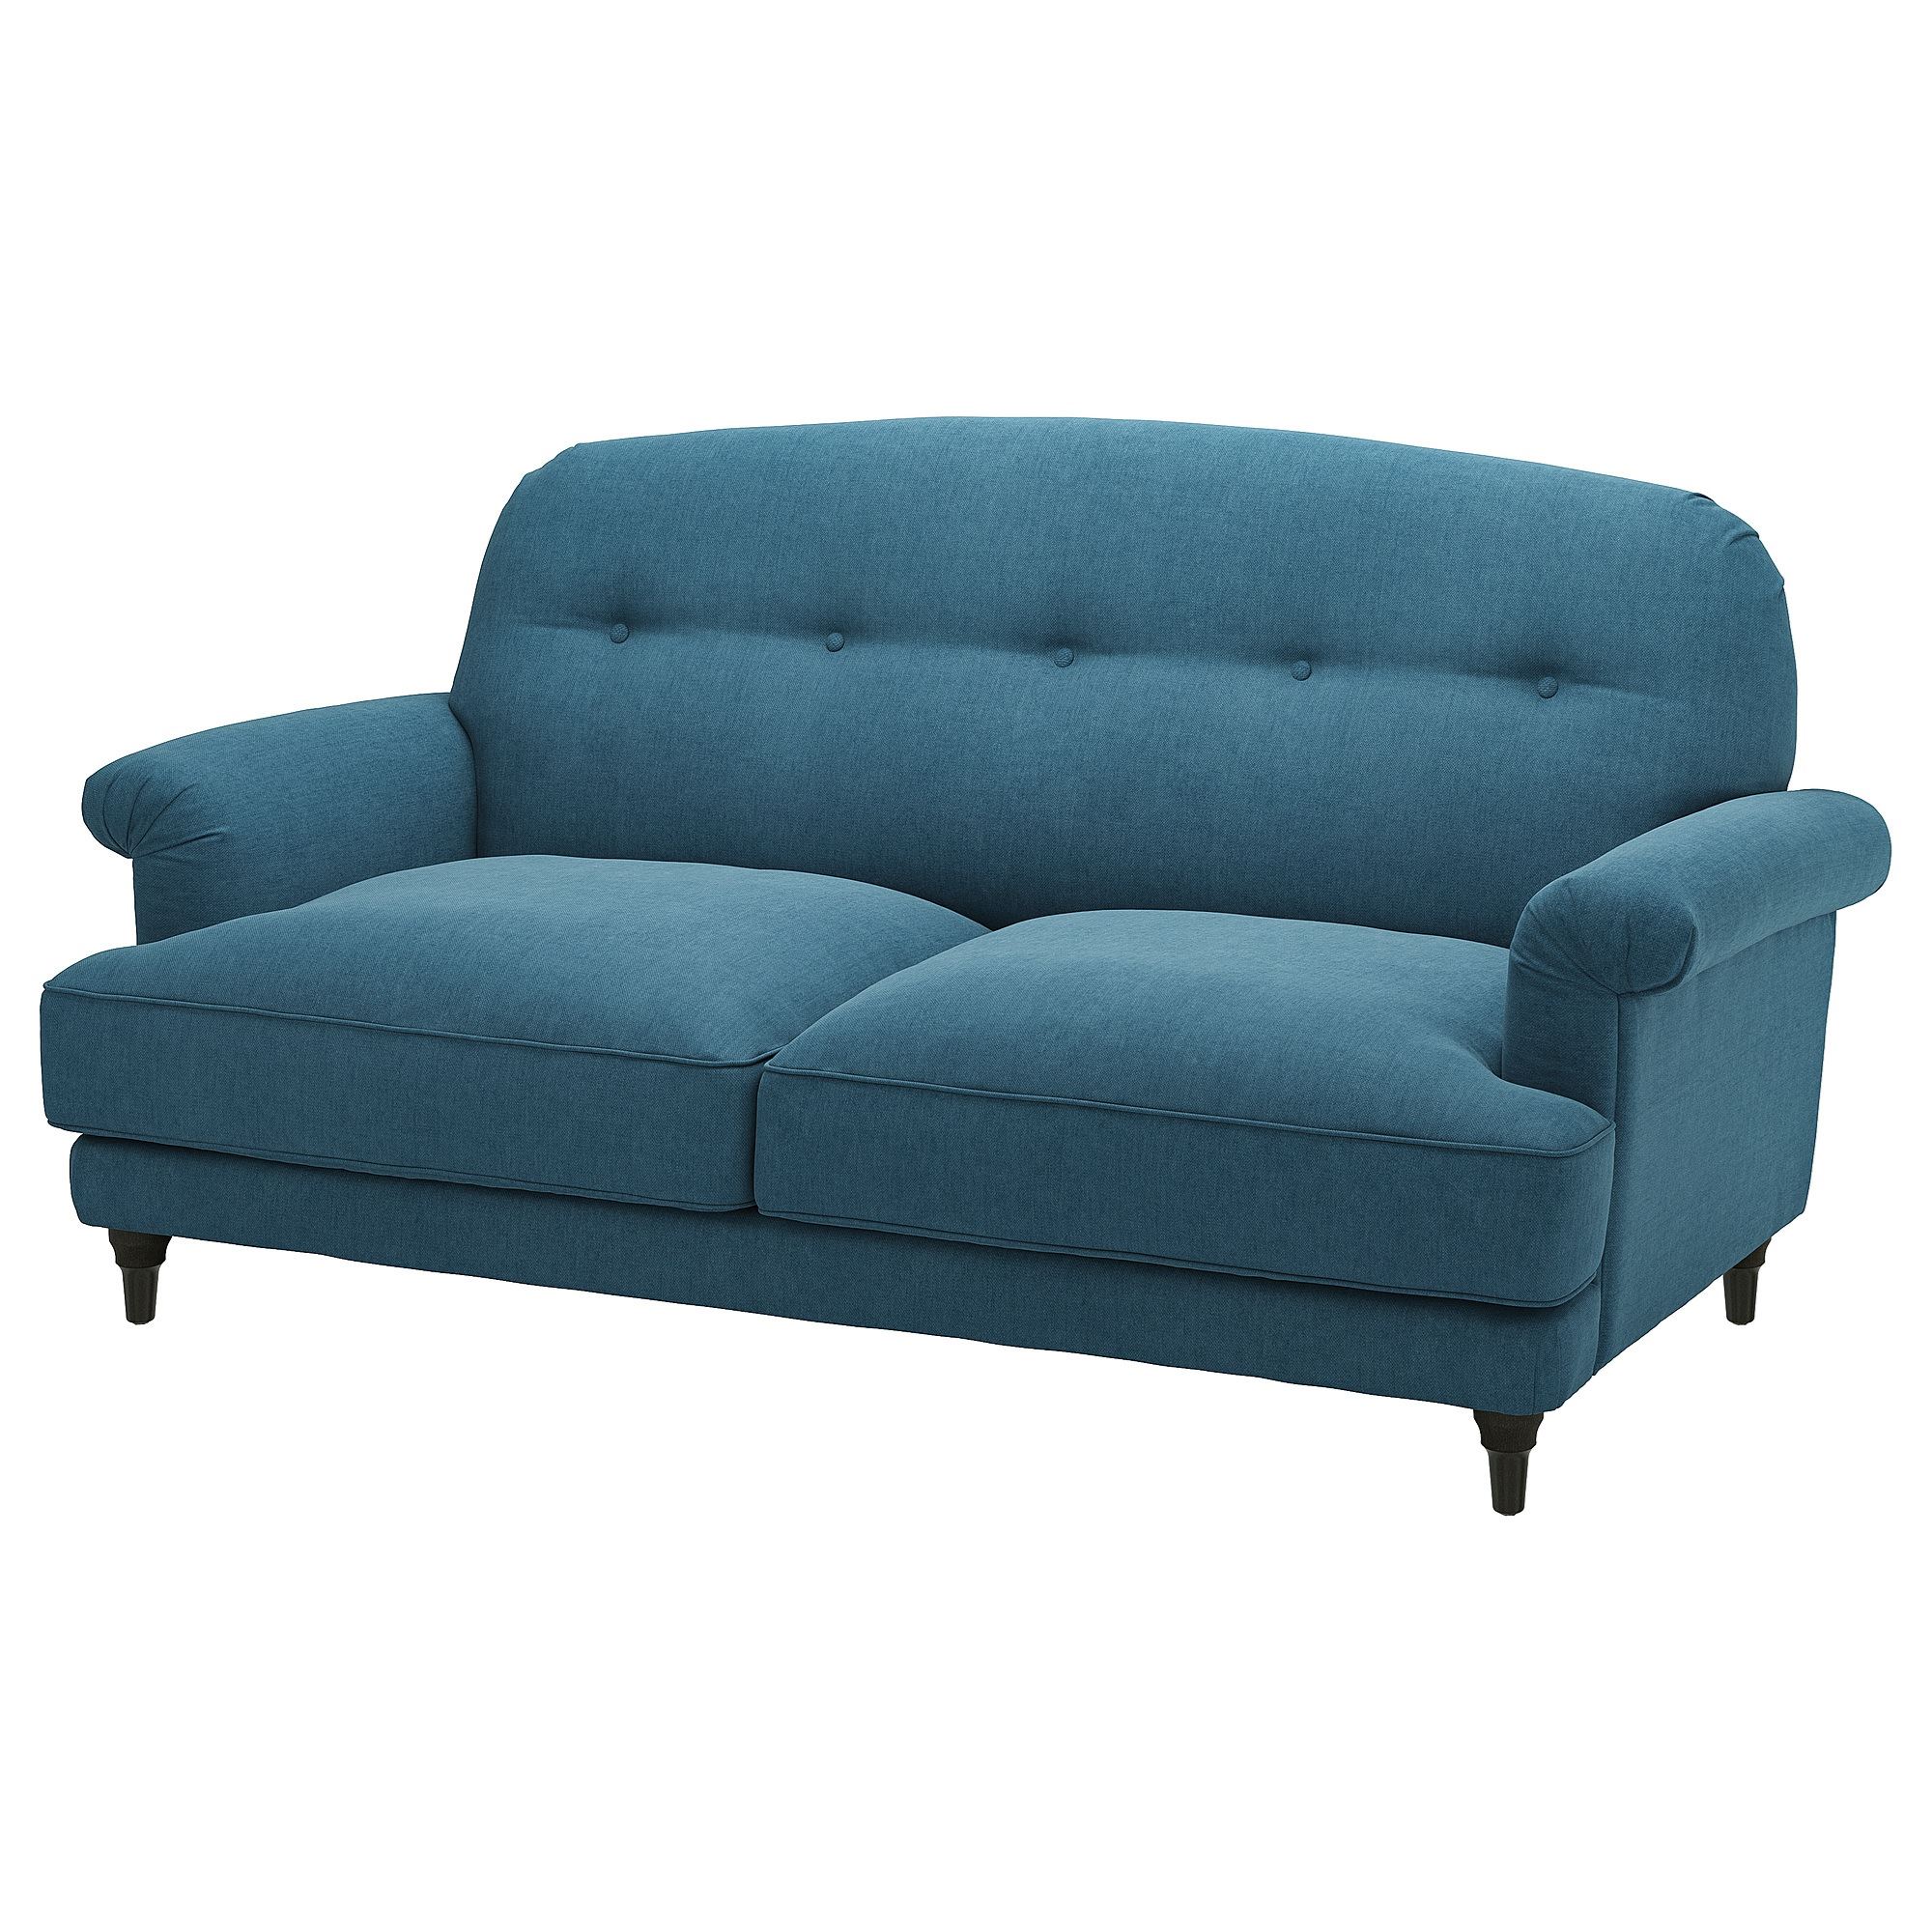 ESSEBODA tallmyra mavi 2li kanepe | IKEA